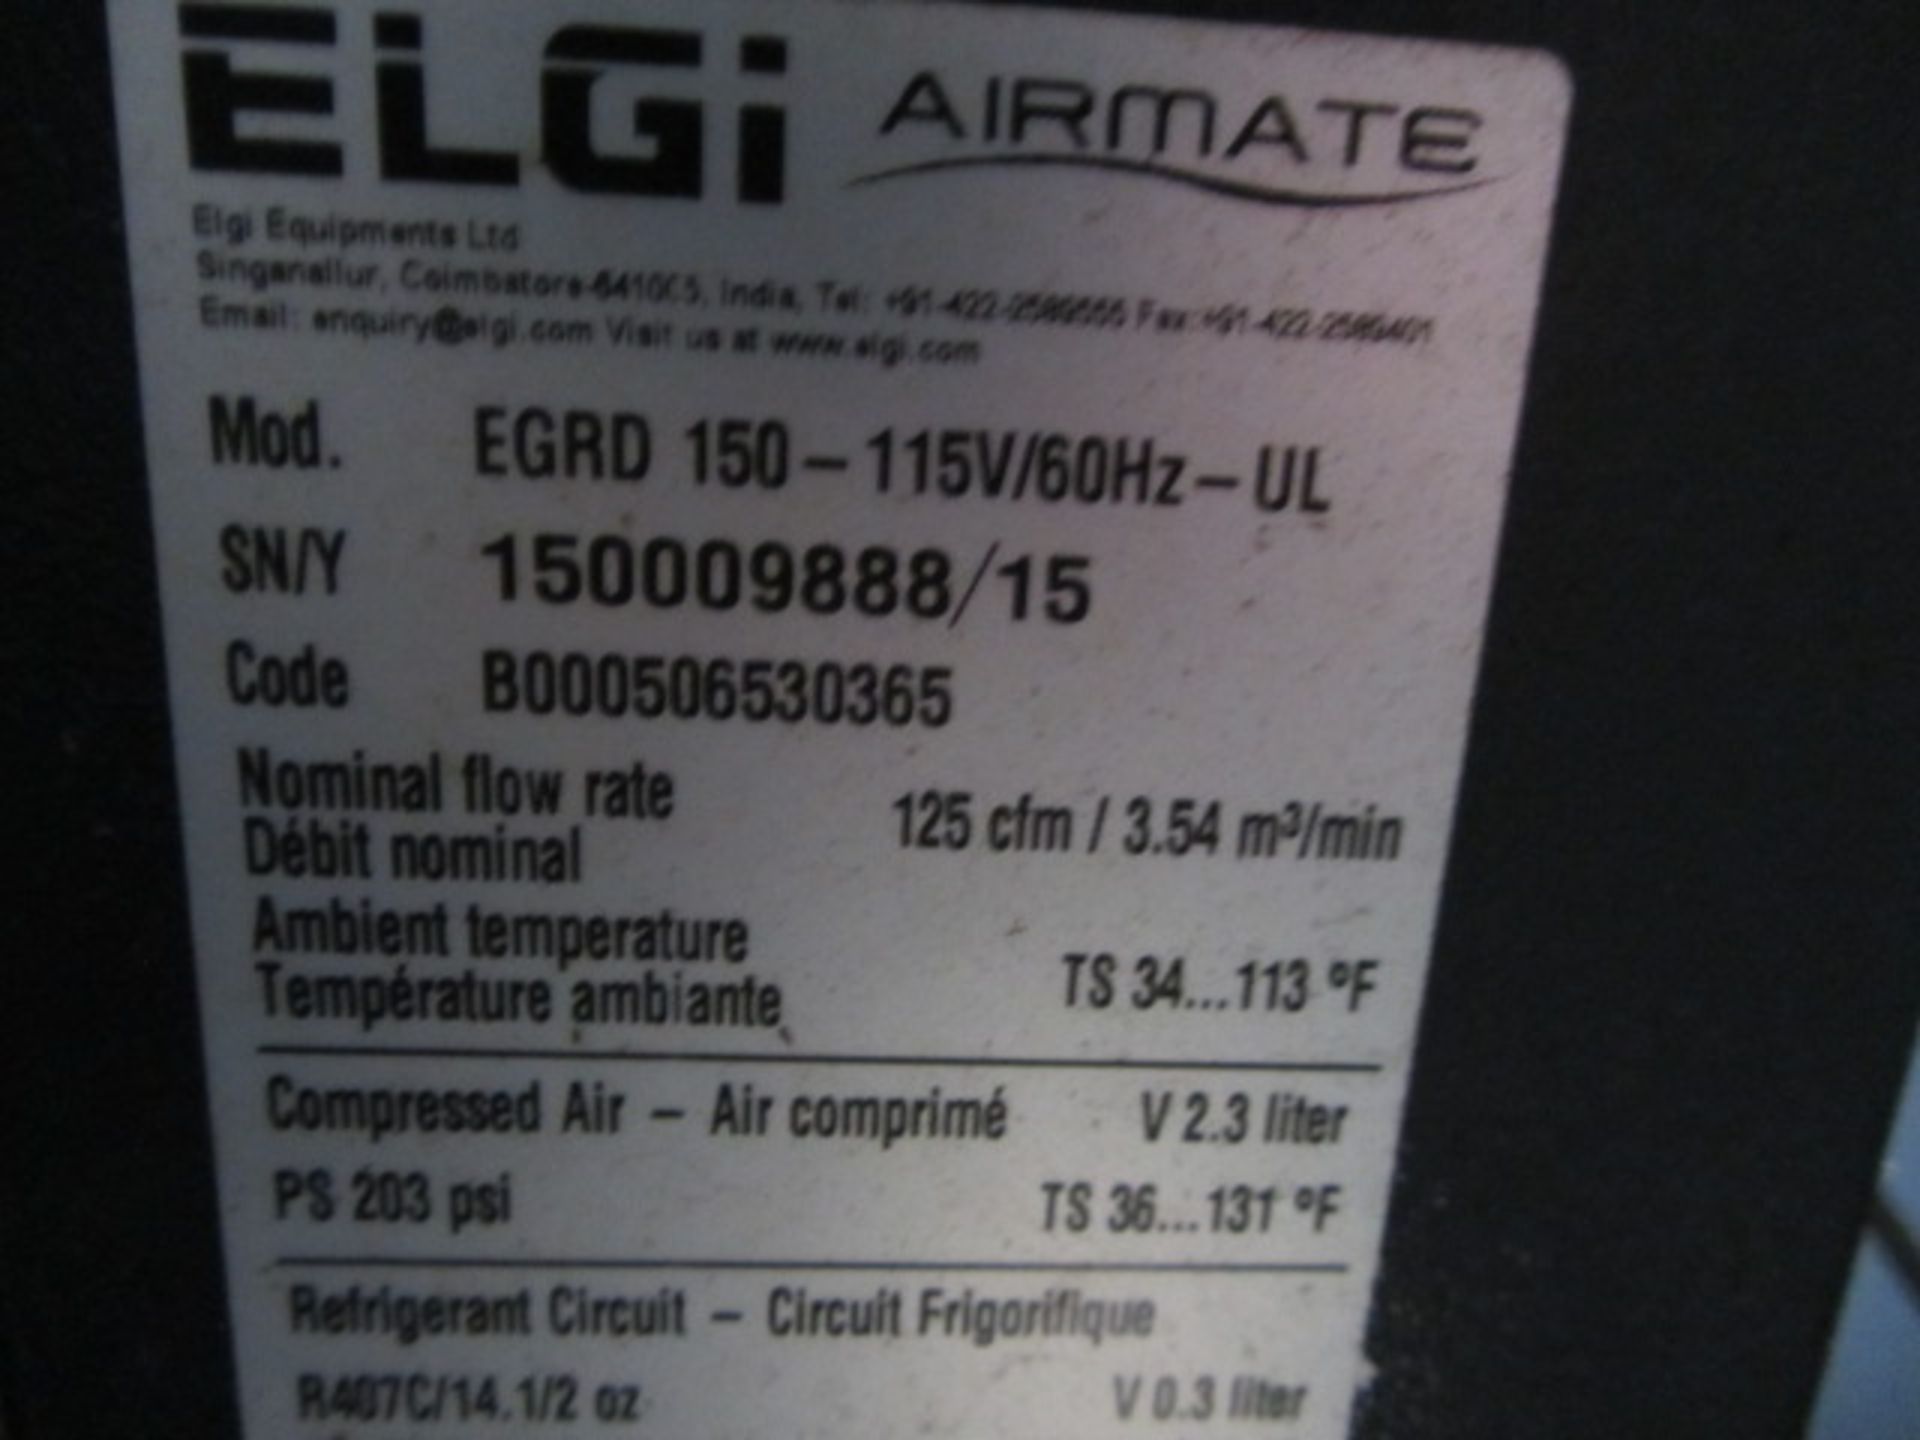 Elgi Model EGRD150 Air Dryer, sn:150009888/15 - Image 5 of 5